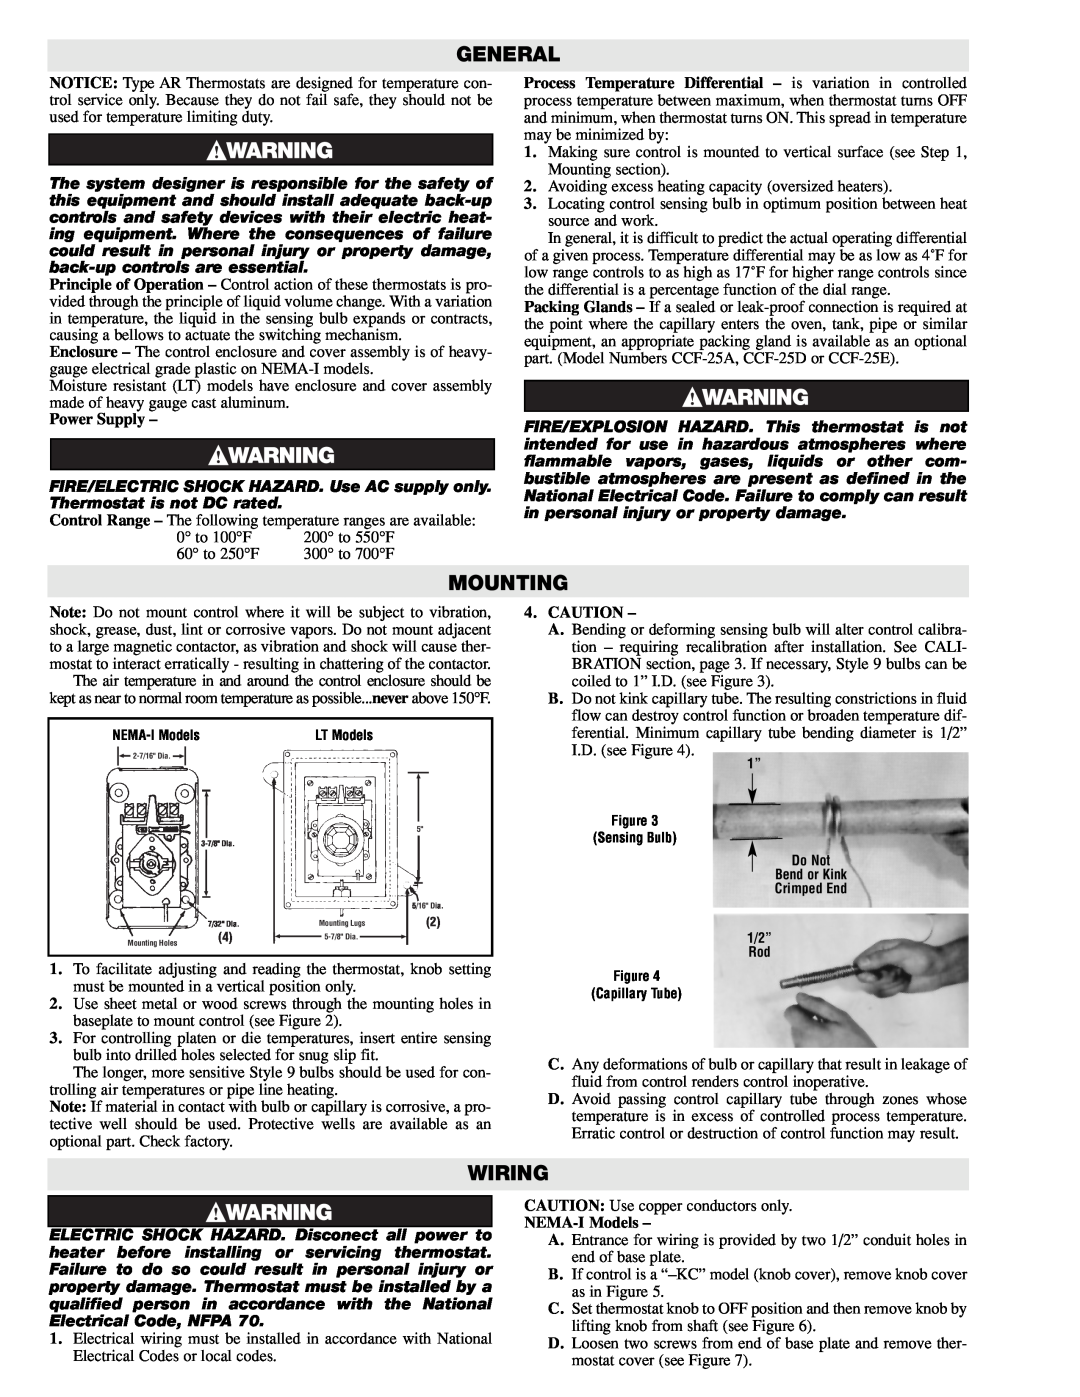 Chromalox PK405-18 installation instructions General, Mounting, Wiring, Power Supply, Caution, NEMA-I Models 